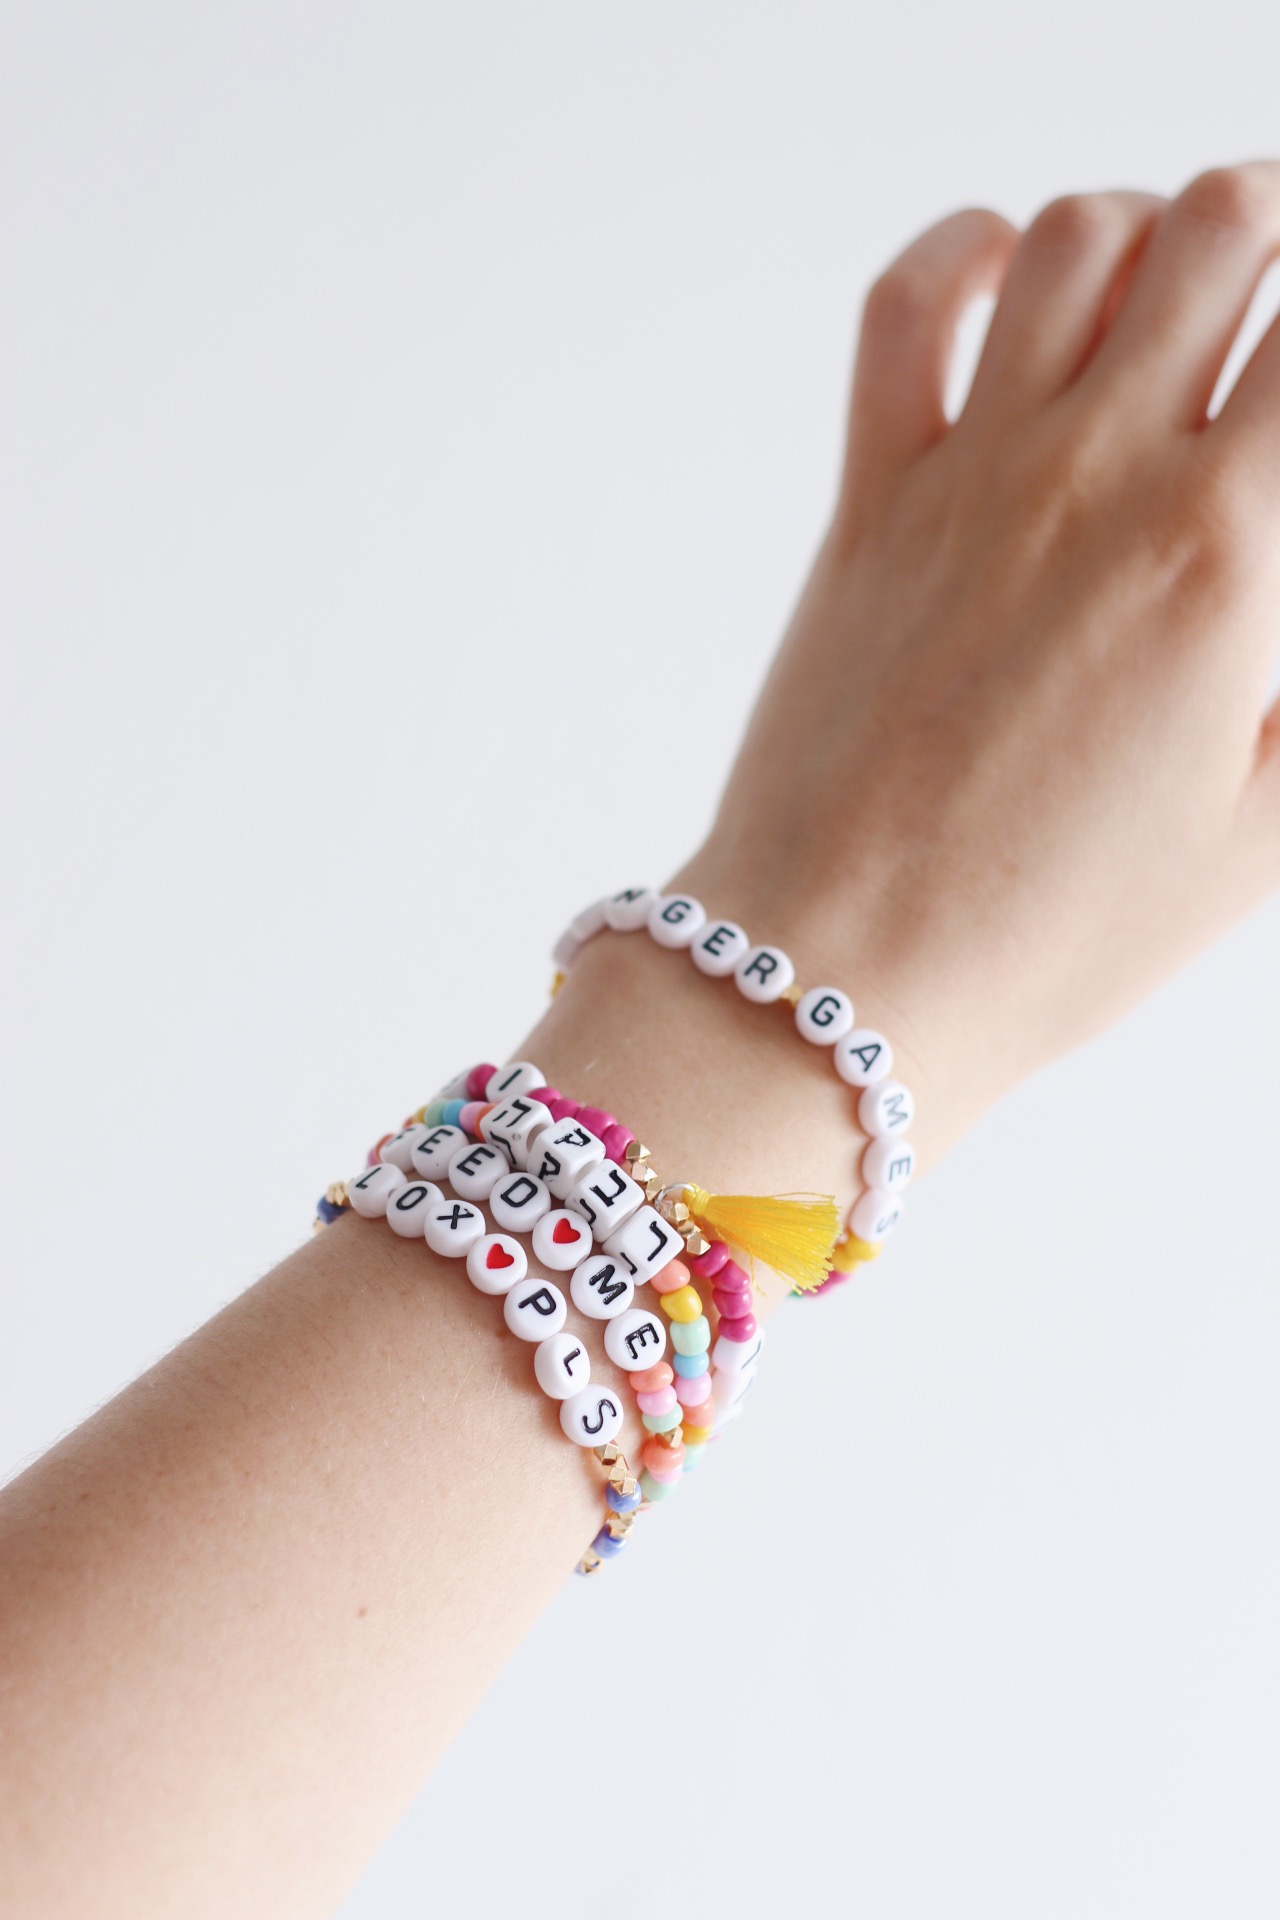 yom kippur crafts break fast bracelets